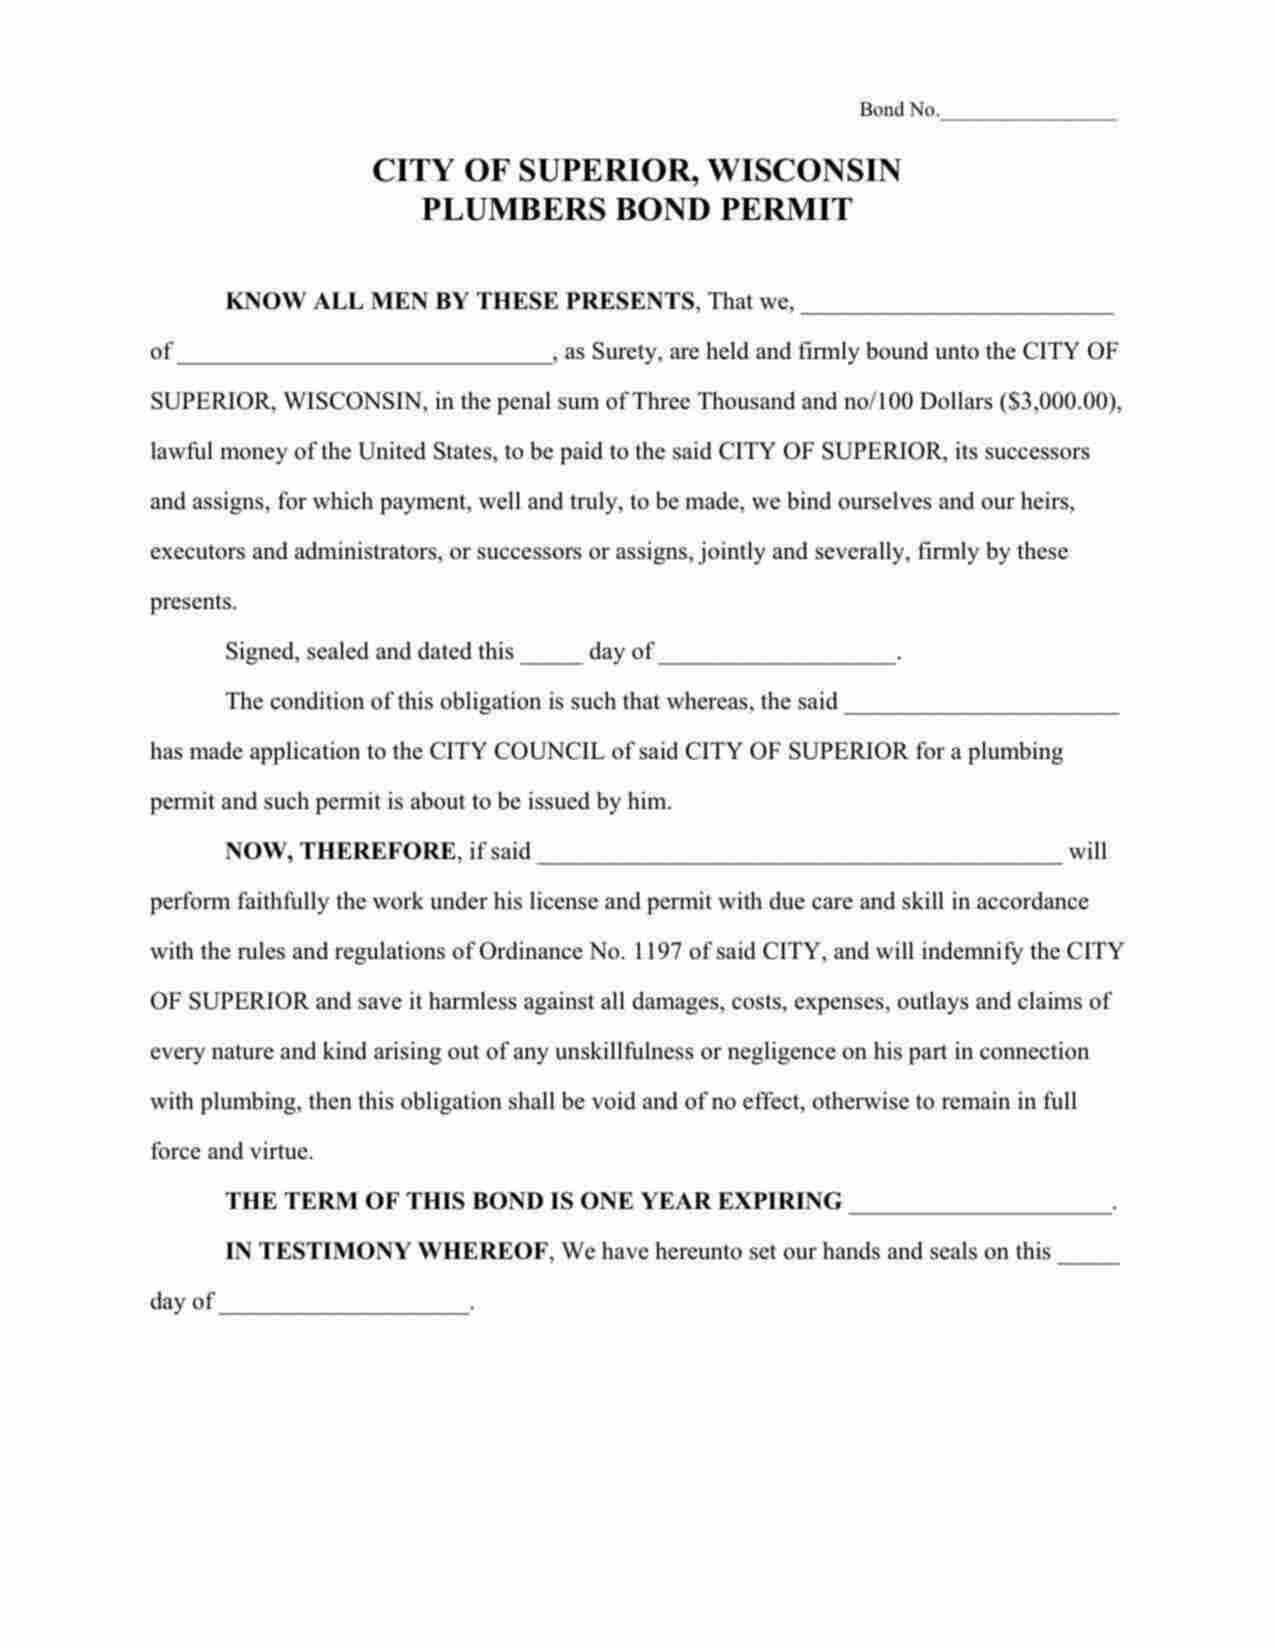 Wisconsin Plumbers Permit Bond Form